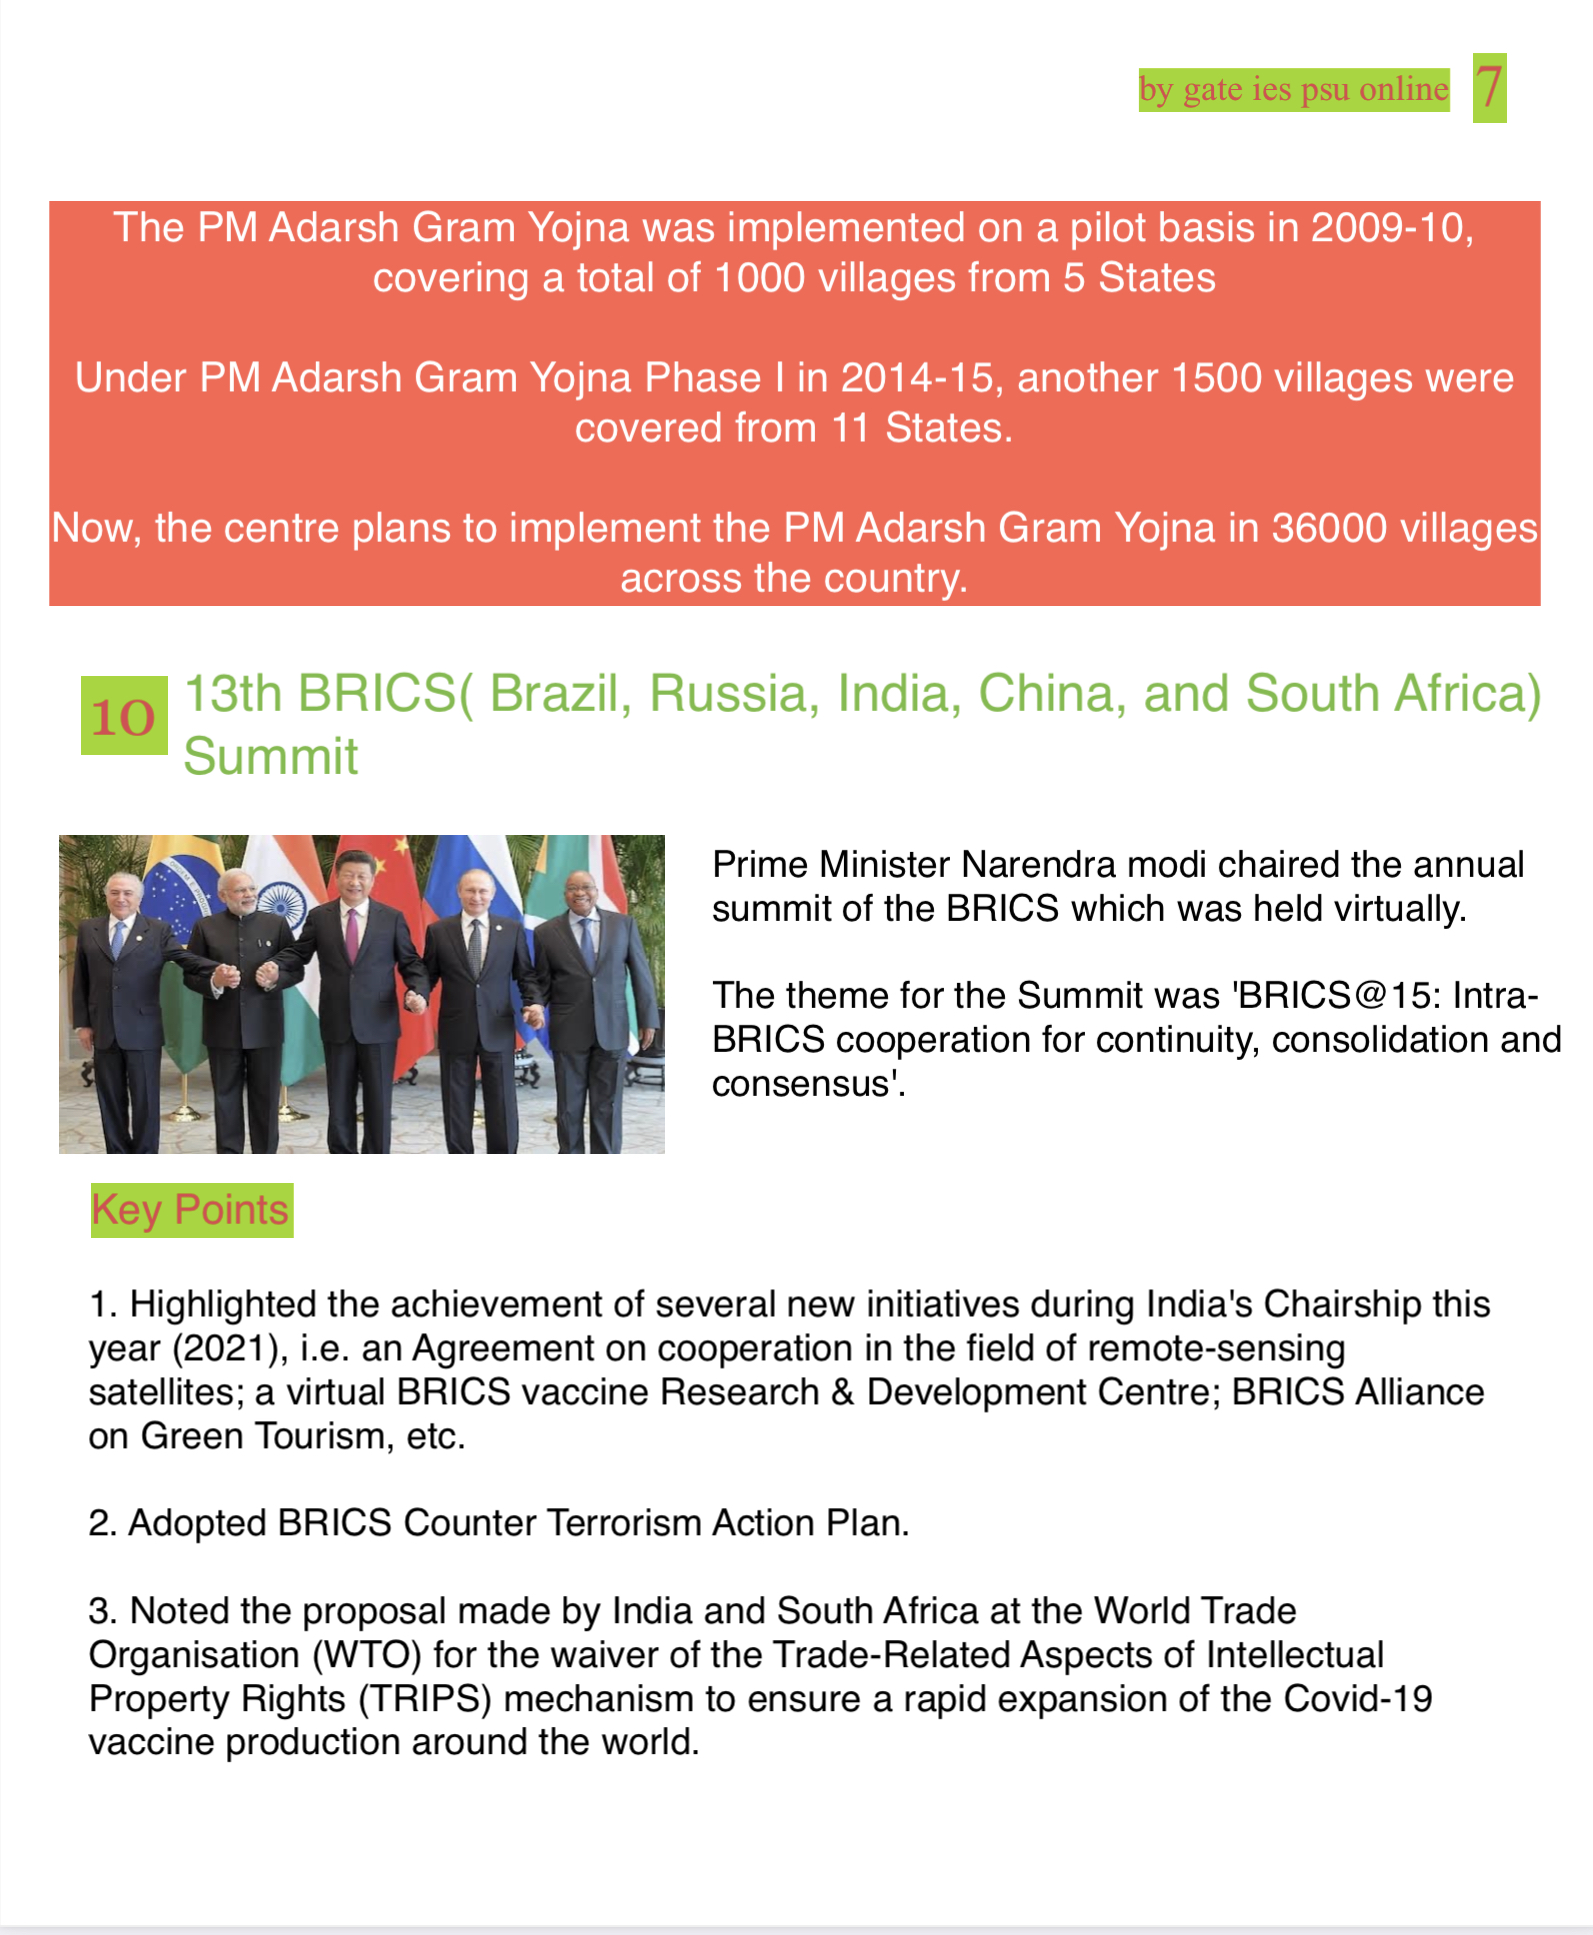 13 BRICS Submit UPSC IES IRMS Current Affairs 